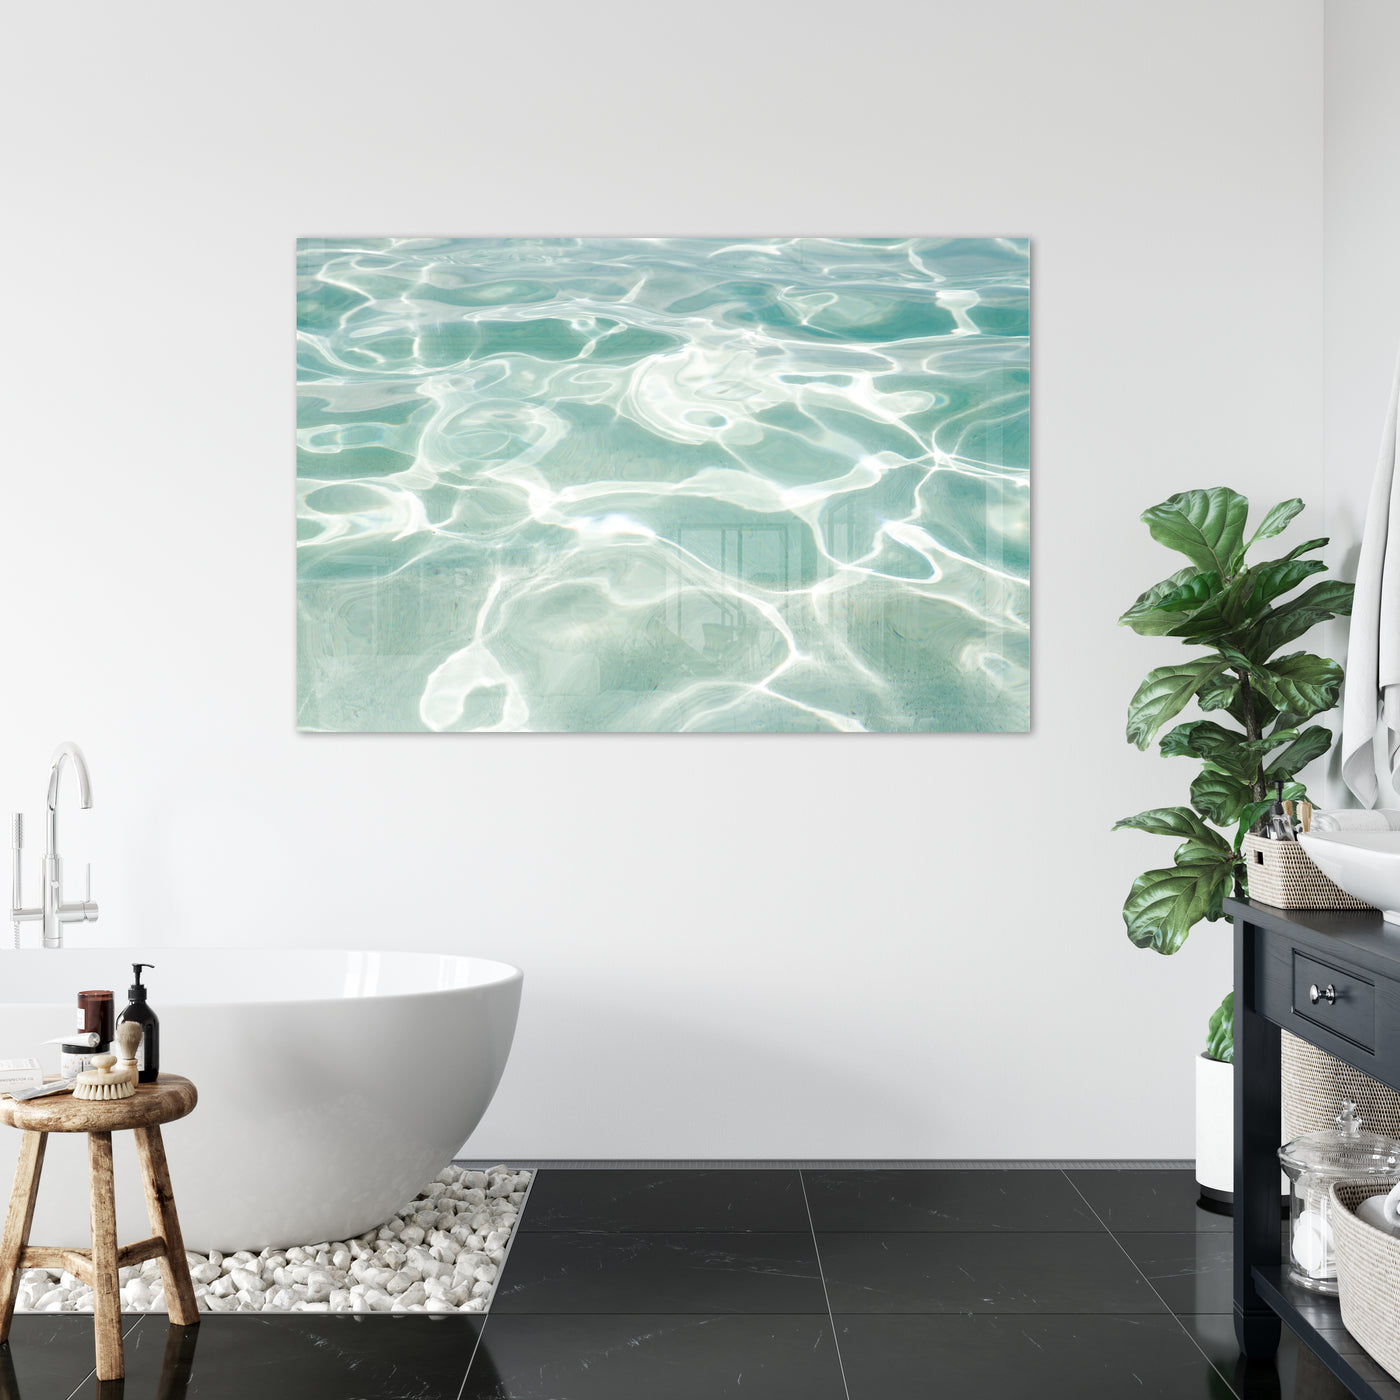 Caribbean Sea - Oversized acrylic glass print by Cattie Coyle Photography in bathroom